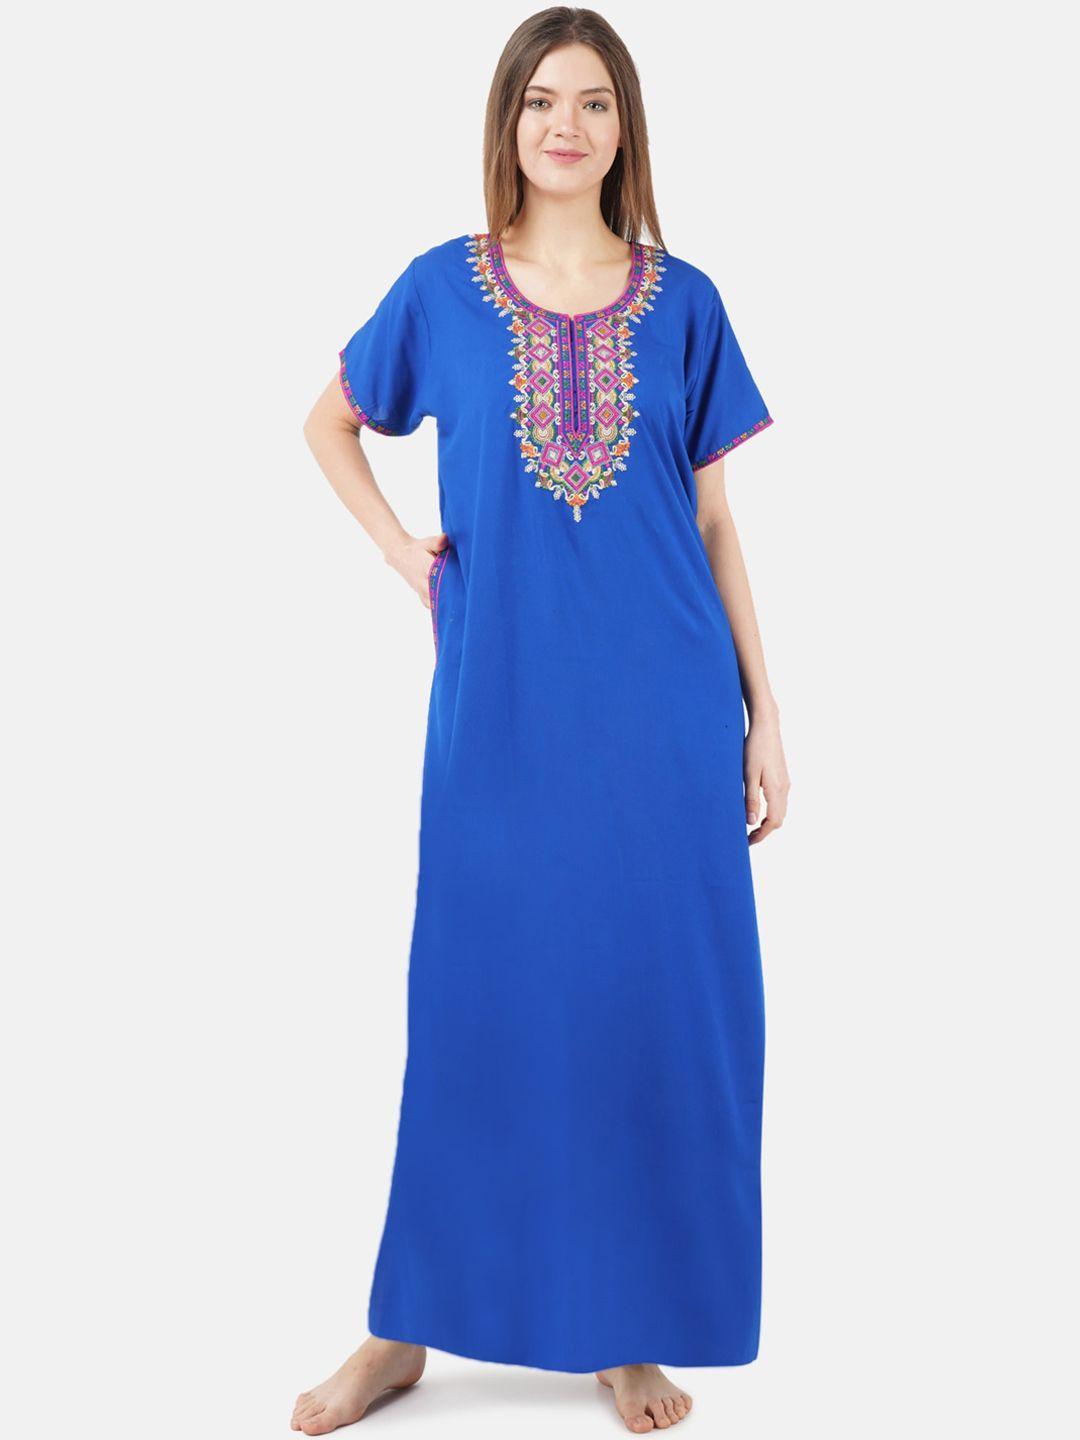 koi-sleepwear-blue-embroidered-nightdress